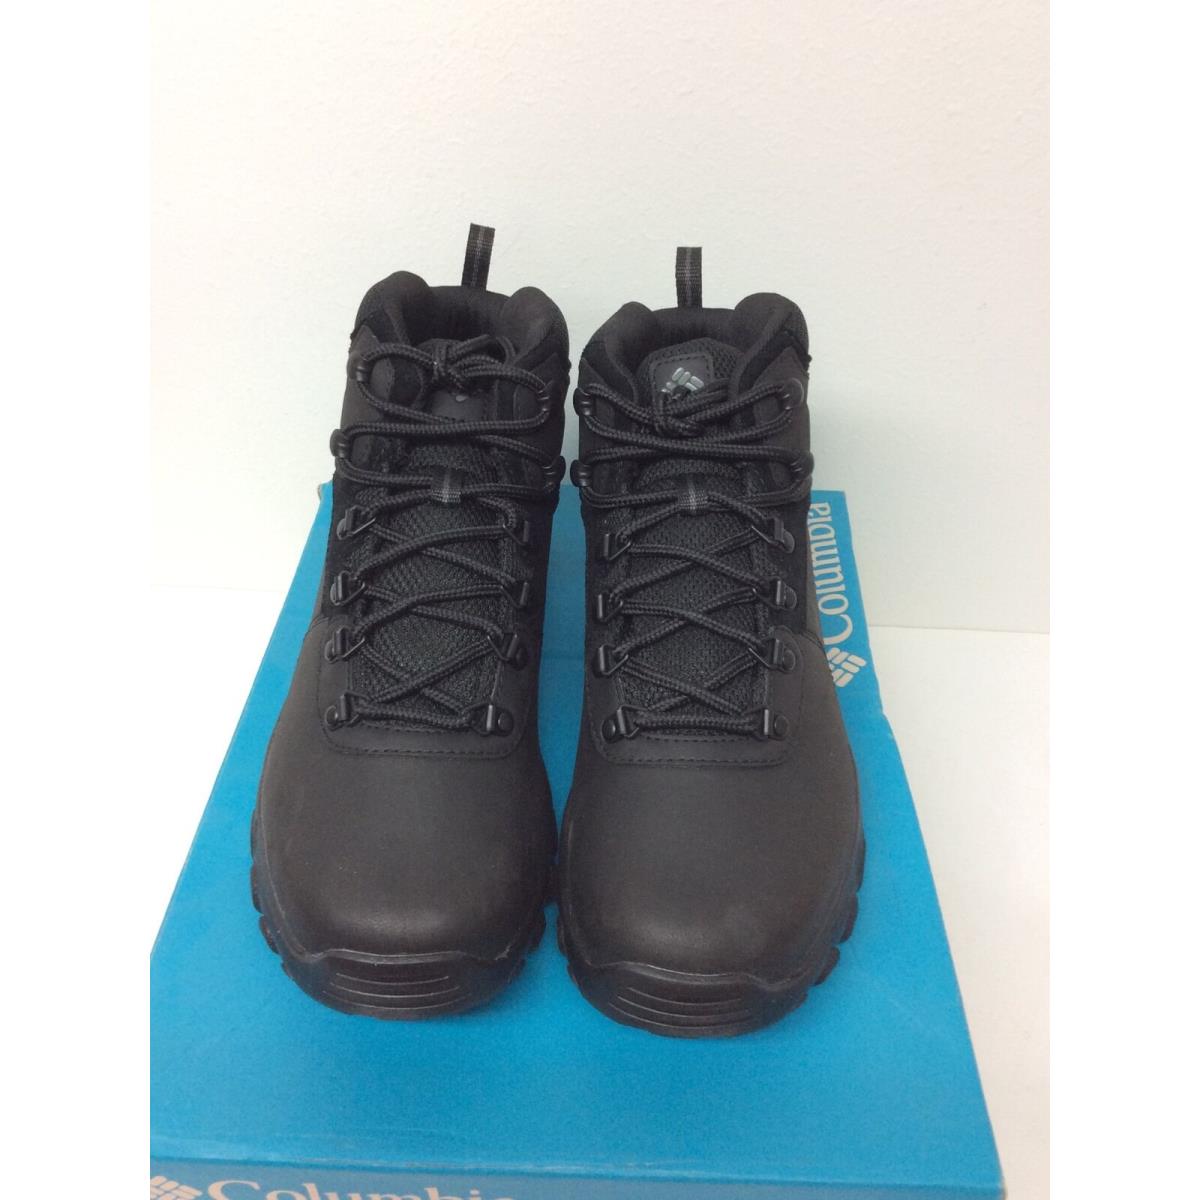 Columbia Shoes Mens Newton Ridge Plus II Leather Hiker Boots BM3970 Sz 8.5